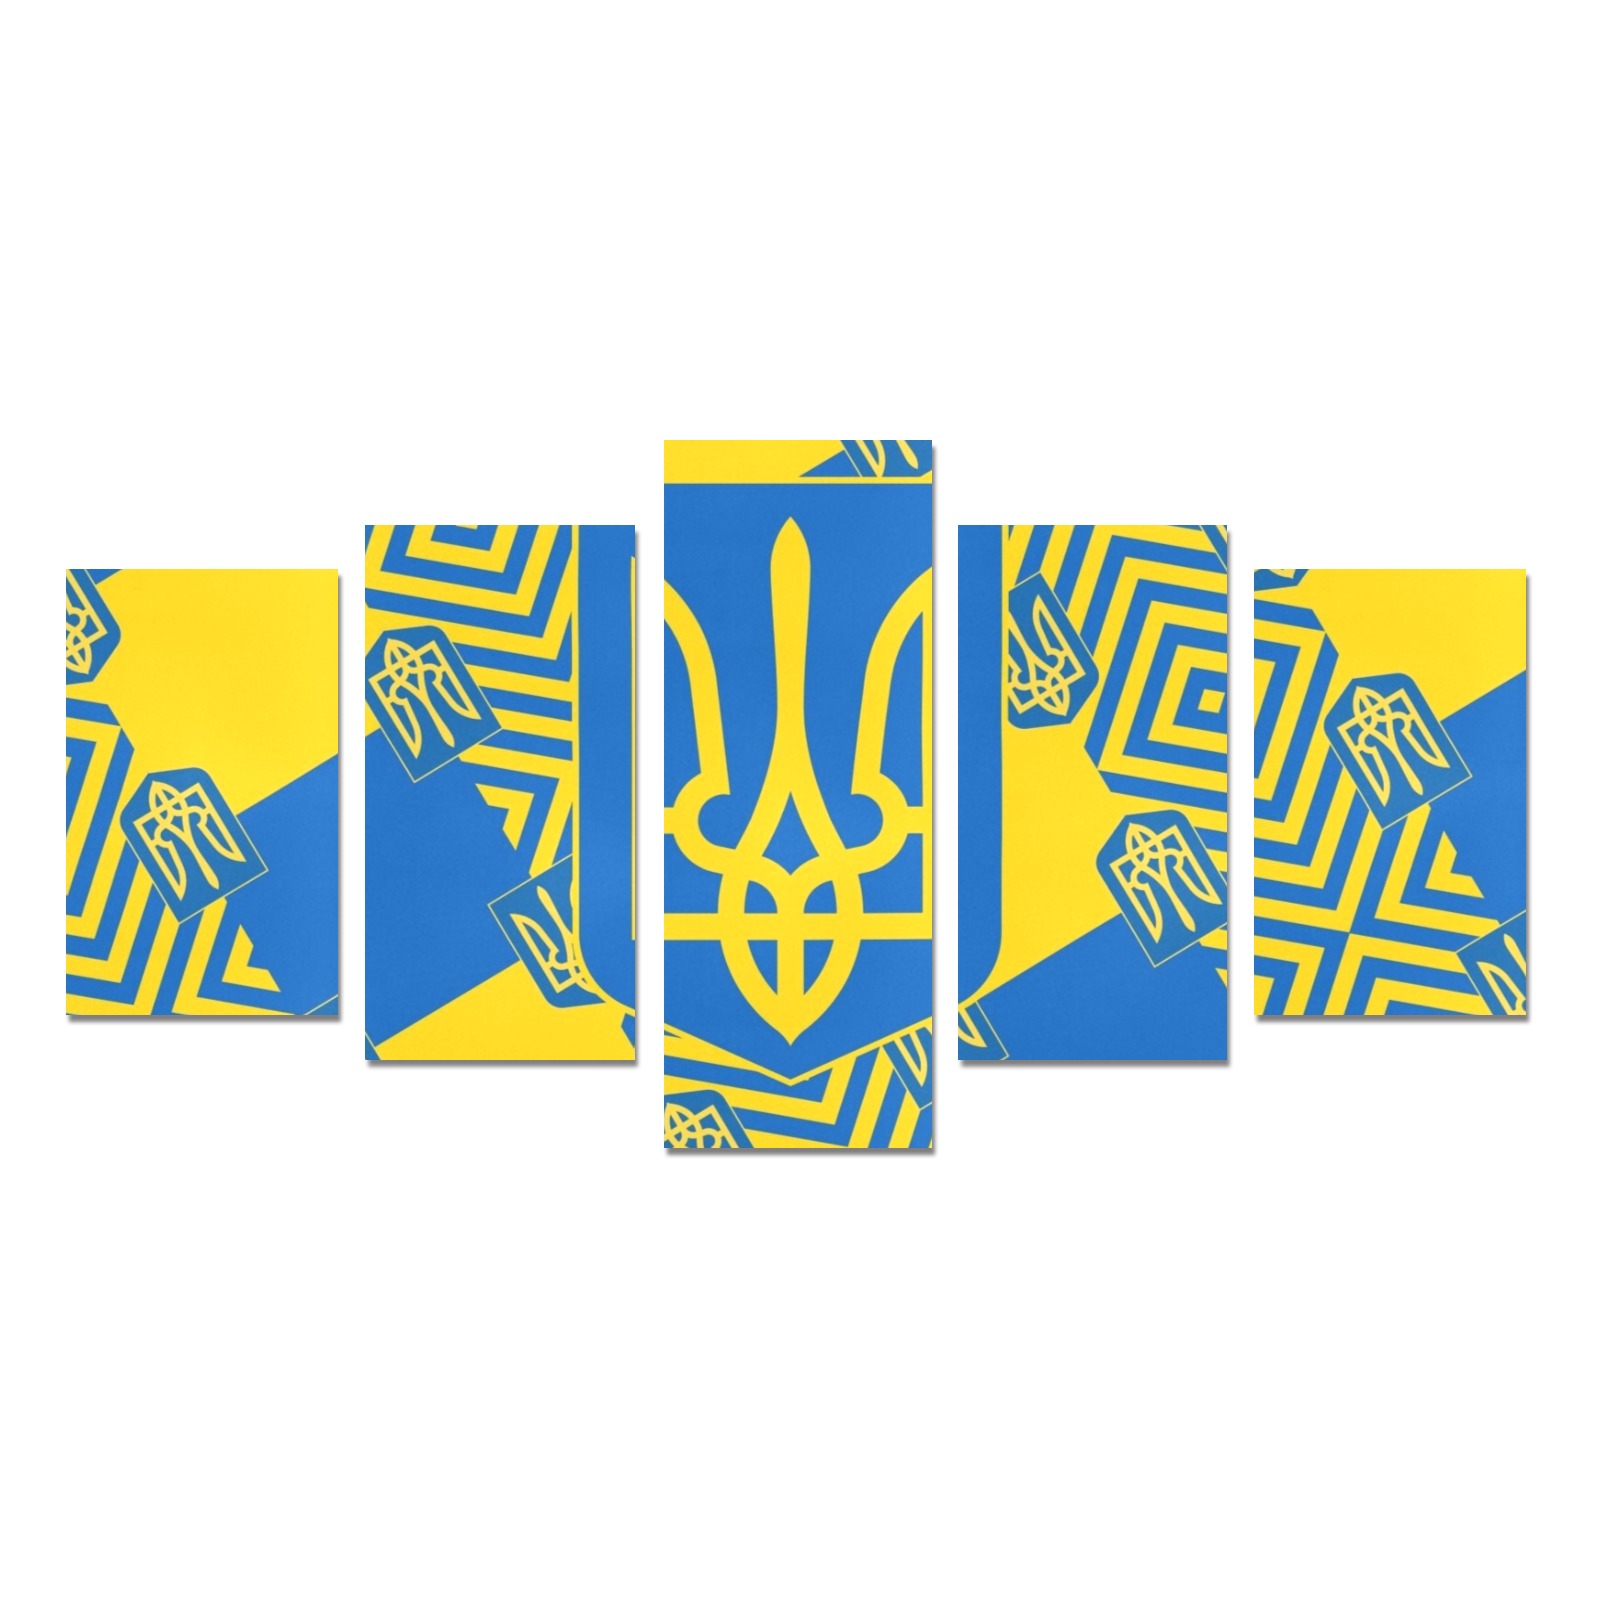 UKRAINE 2 Canvas Print Sets C (No Frame)